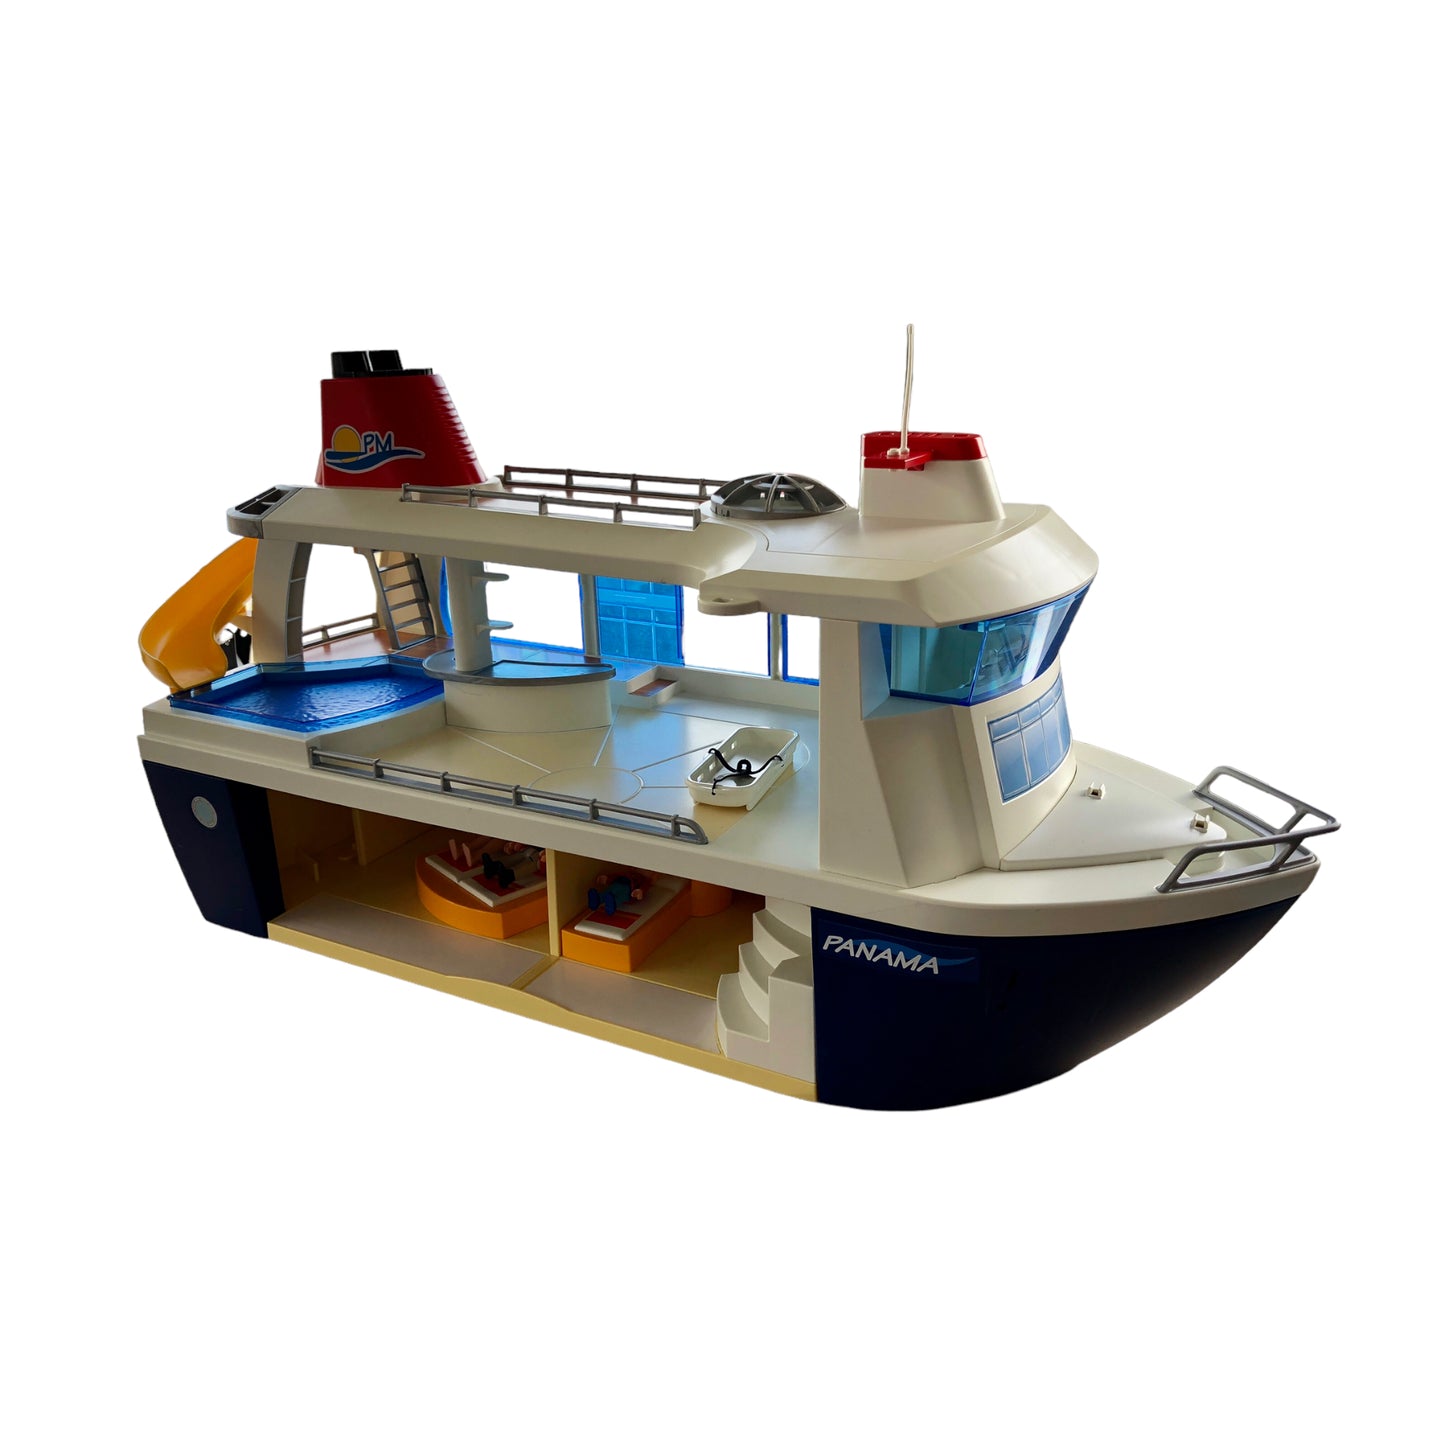 Playmobil ® 6978 - Cruise Ship